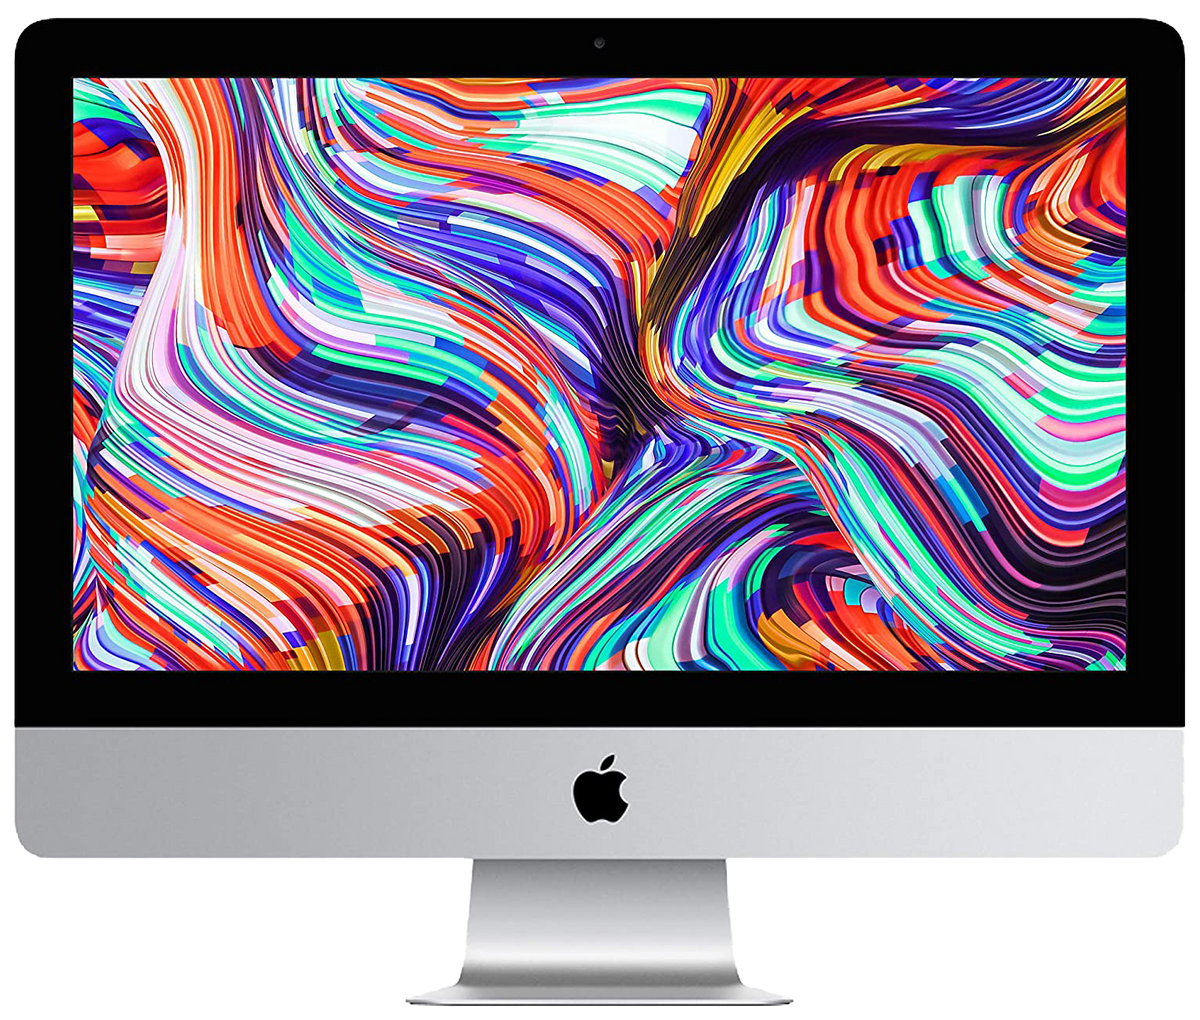 iMac 21.5" i5 8GB RAM 256GB SSD Iris Plus Graphics 640 MHK03